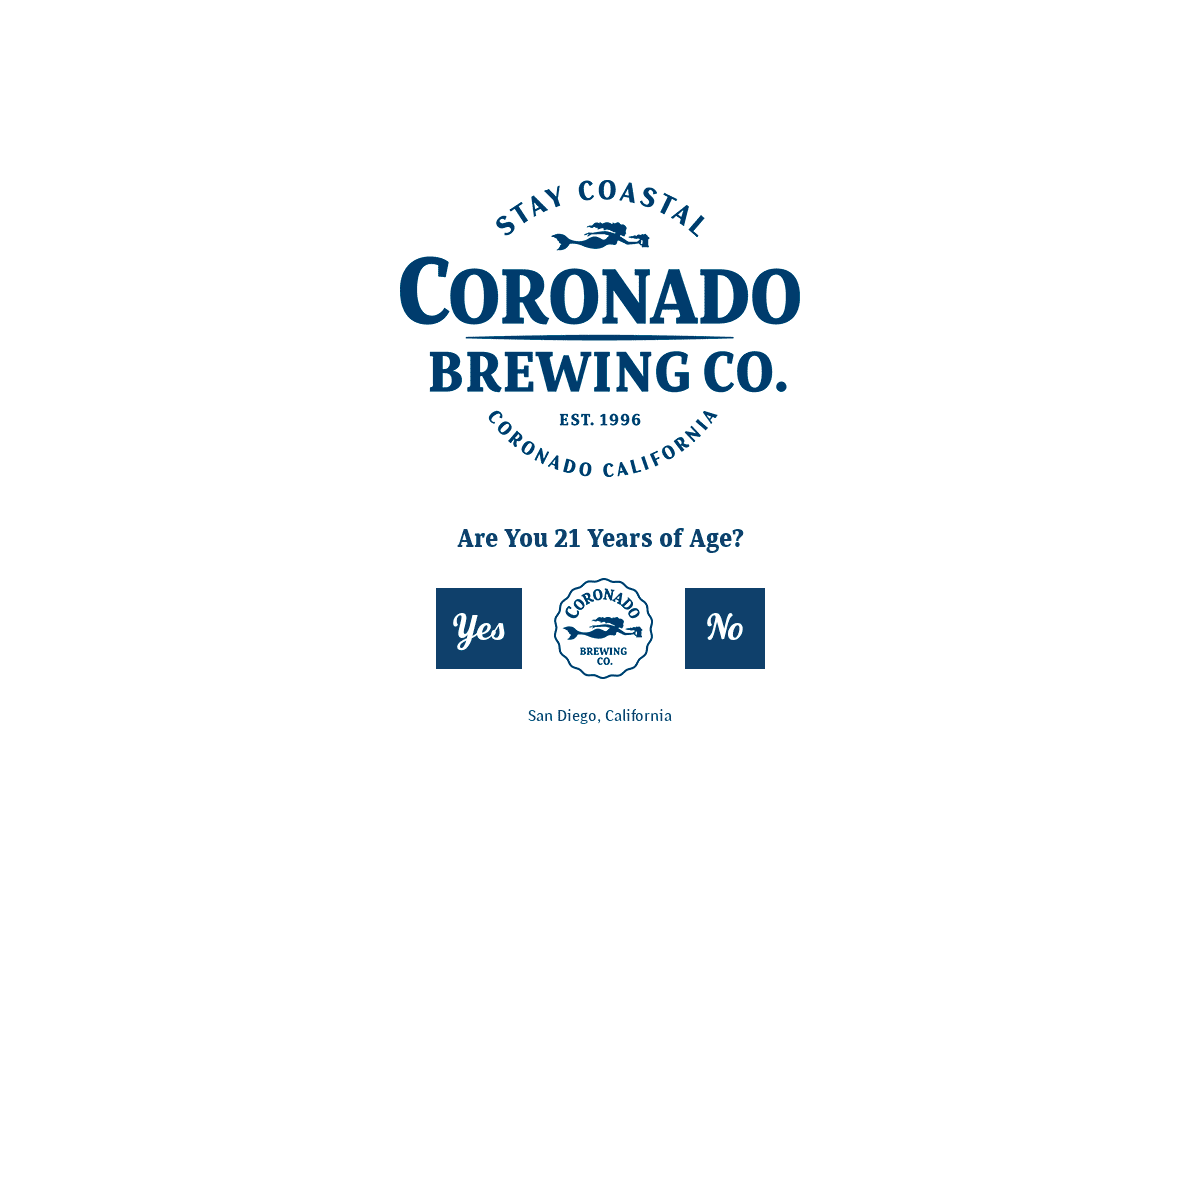 A complete backup of coronadobrewing.com